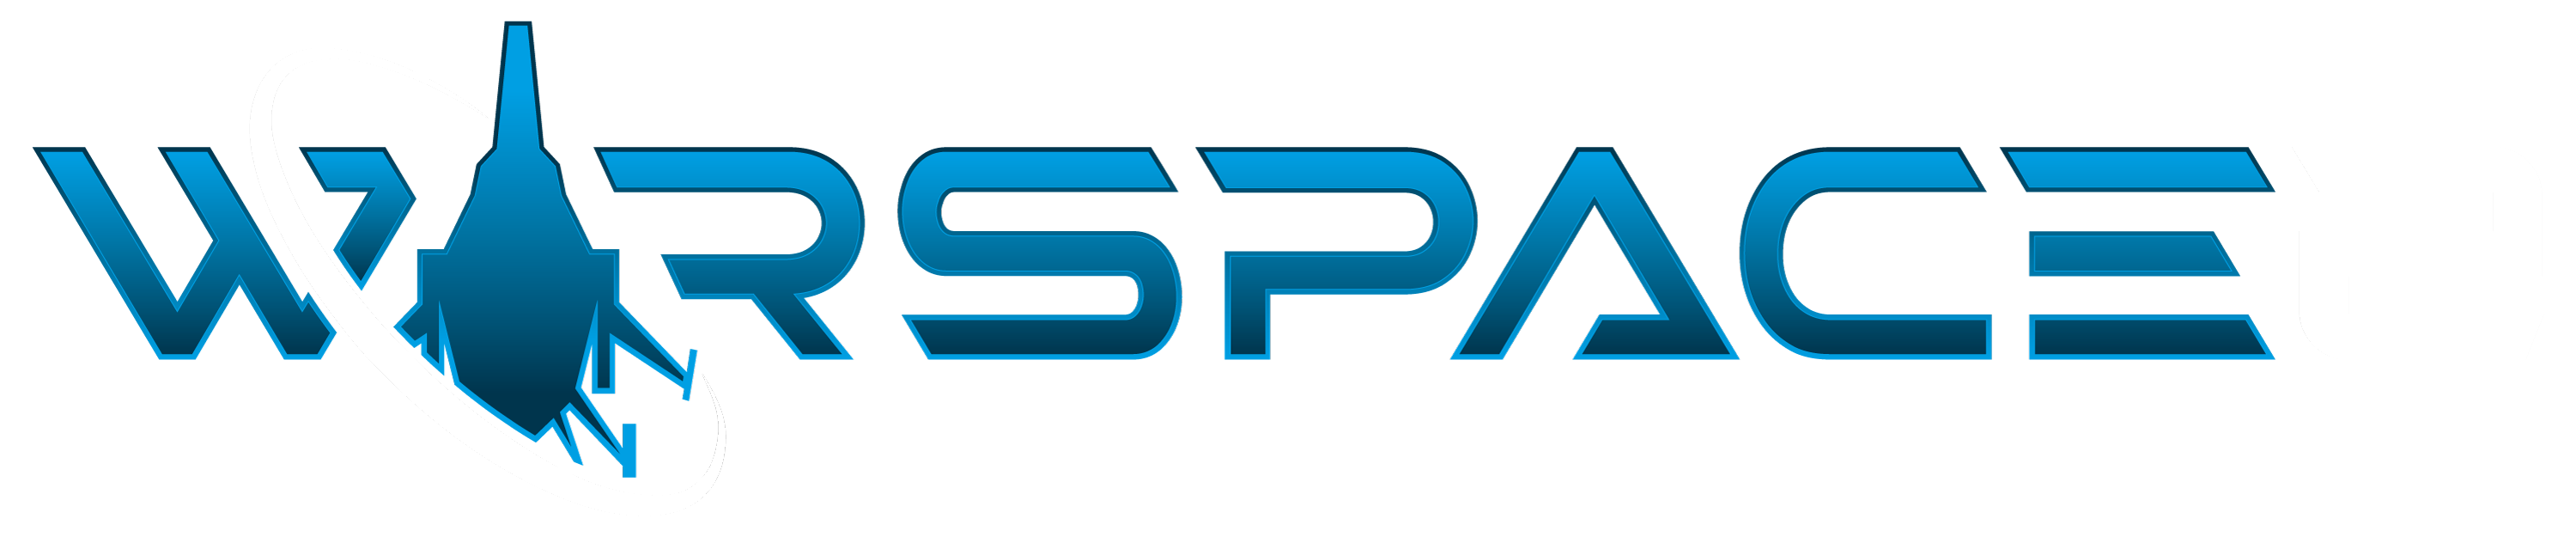 Warspace 2 Logo Text